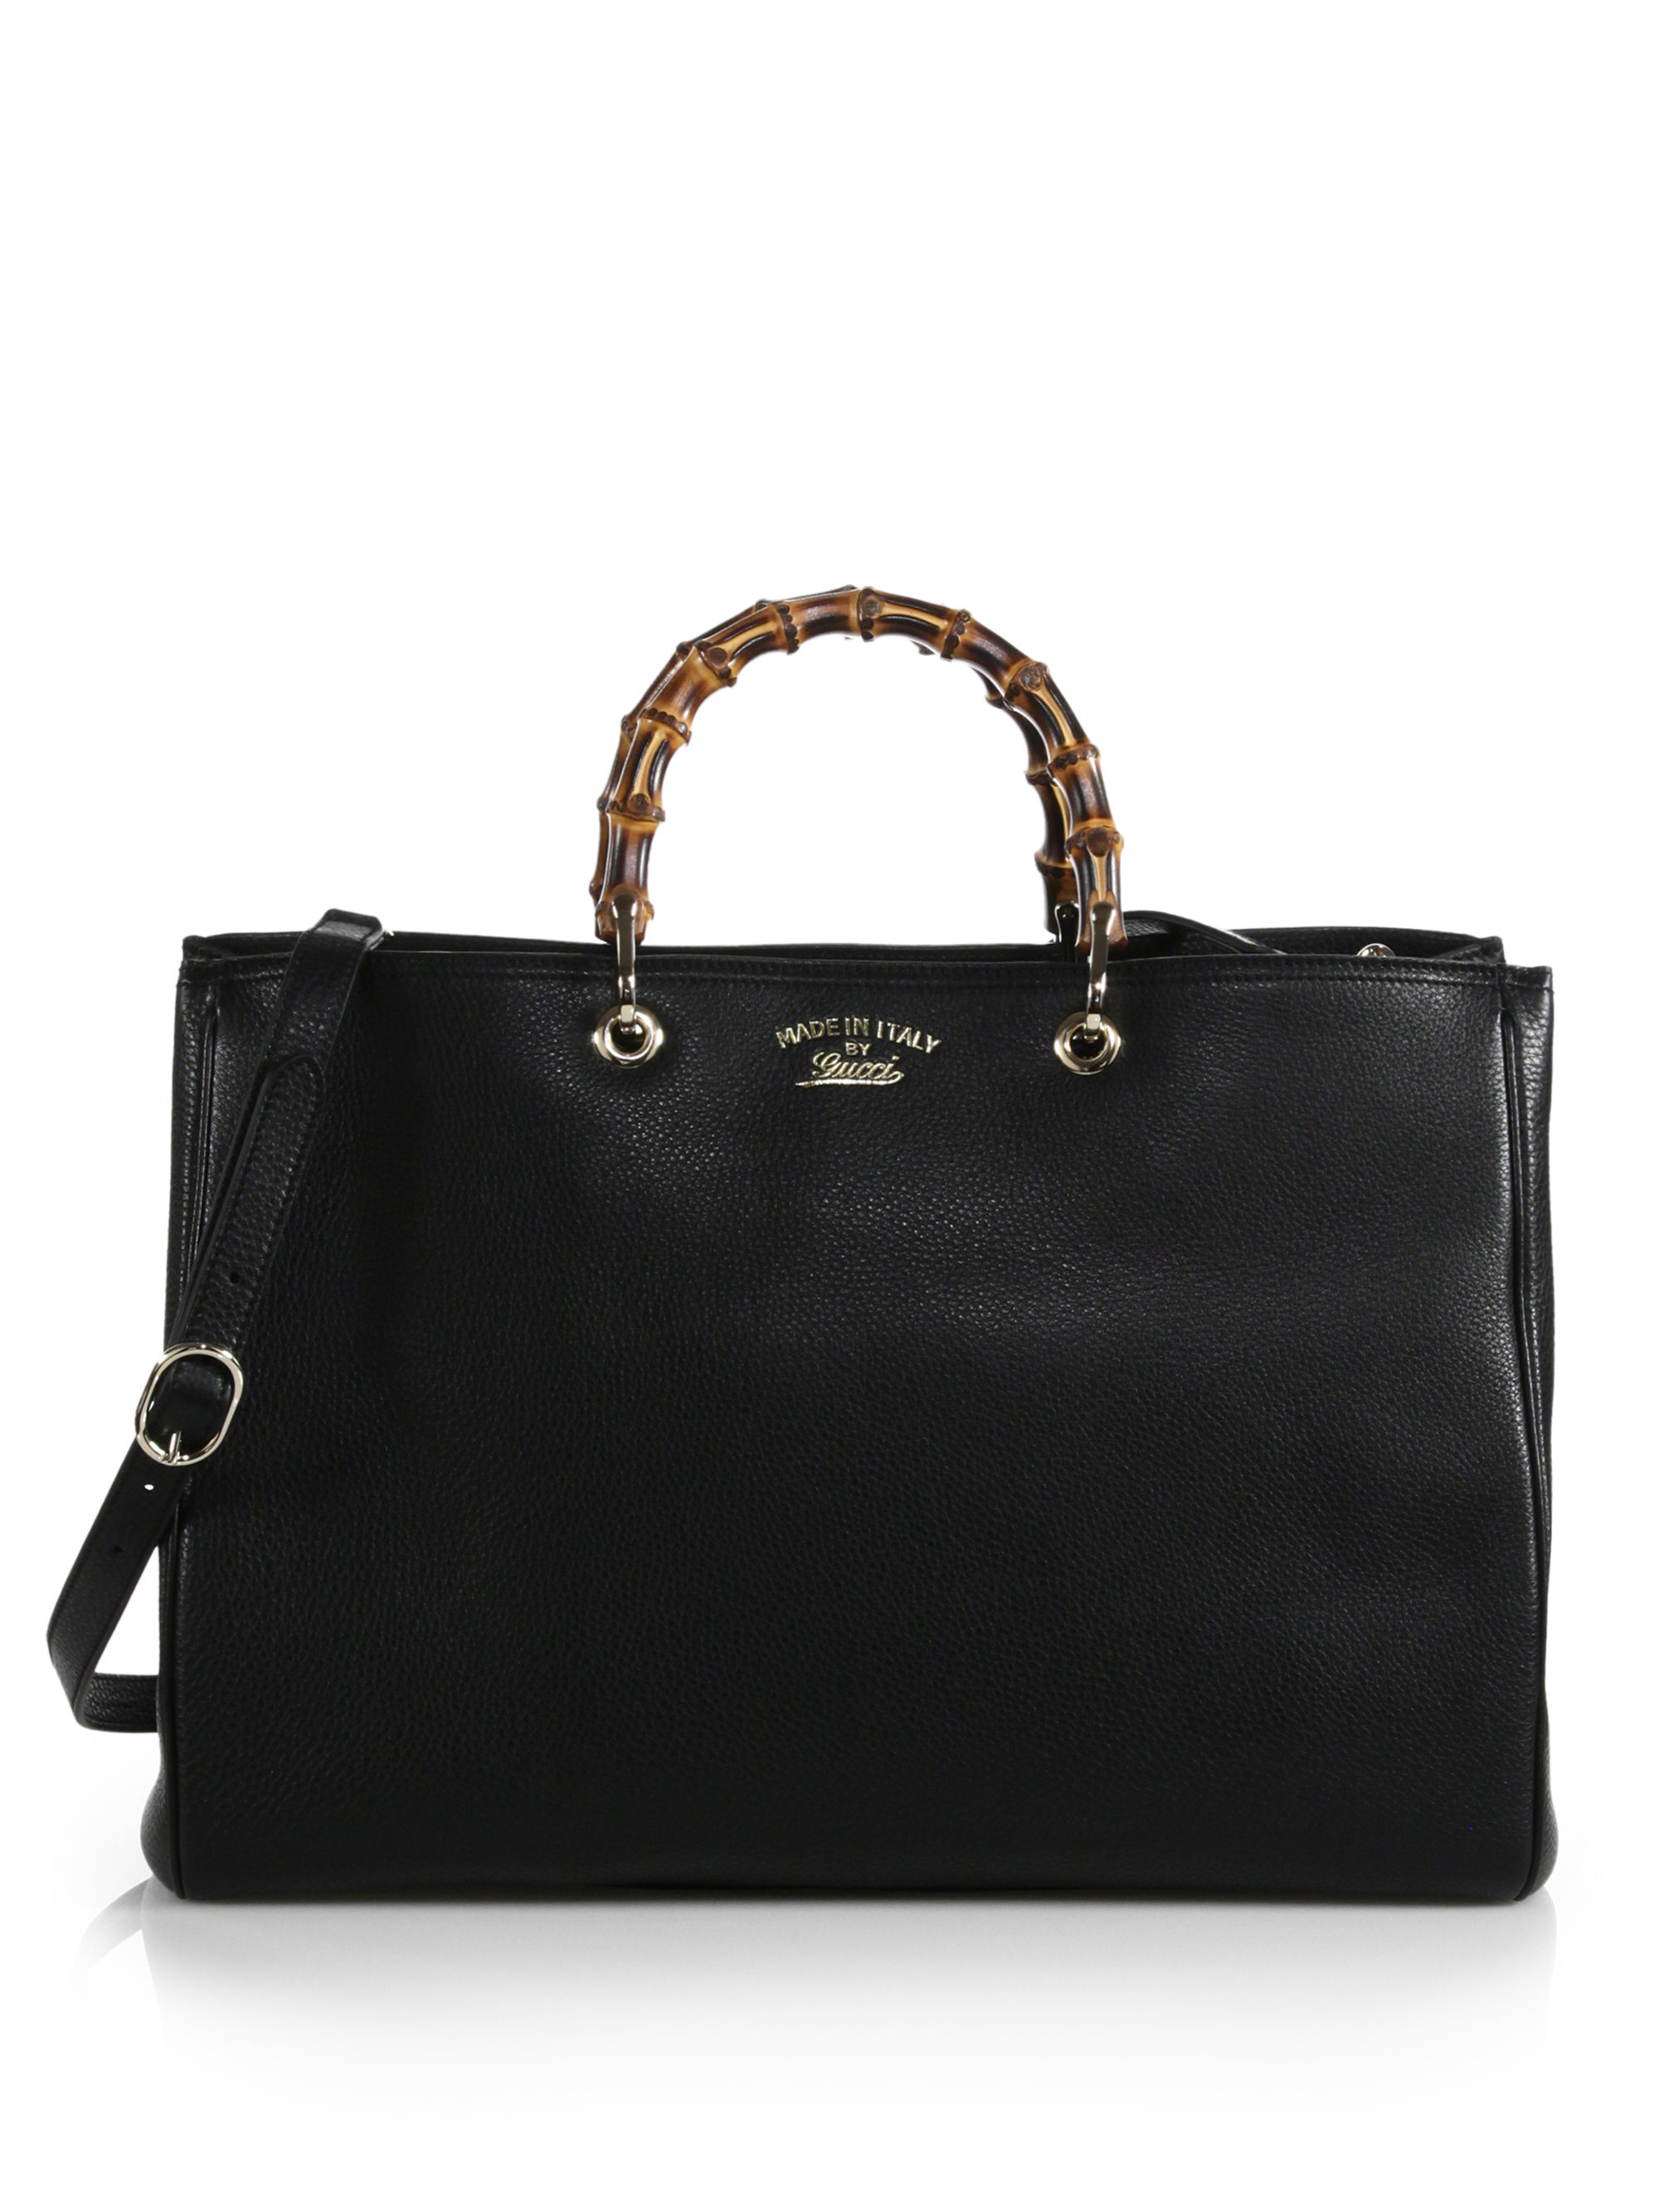 Gucci Bamboo Shopper Tote Bag in Black Leather.jpg